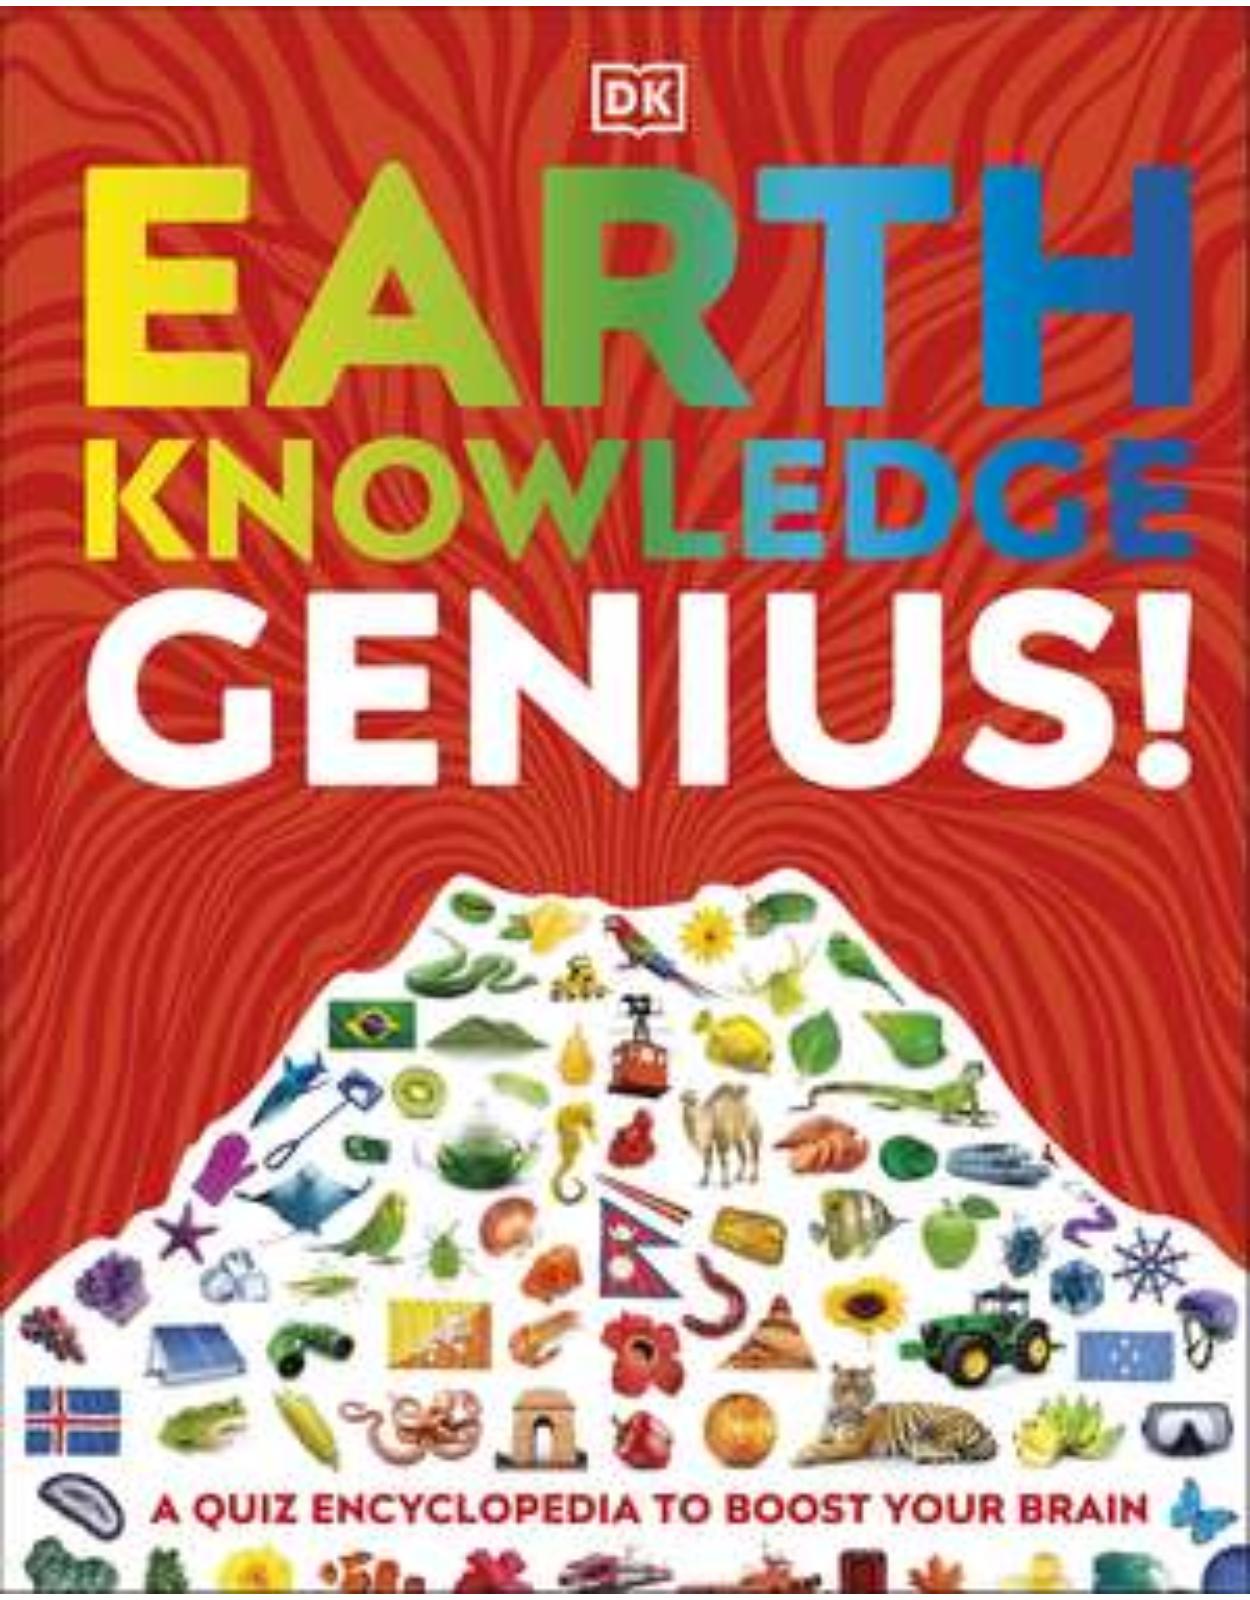 Earth Knowledge Genius!: A Quiz Encyclopedia to Boost Your Brain